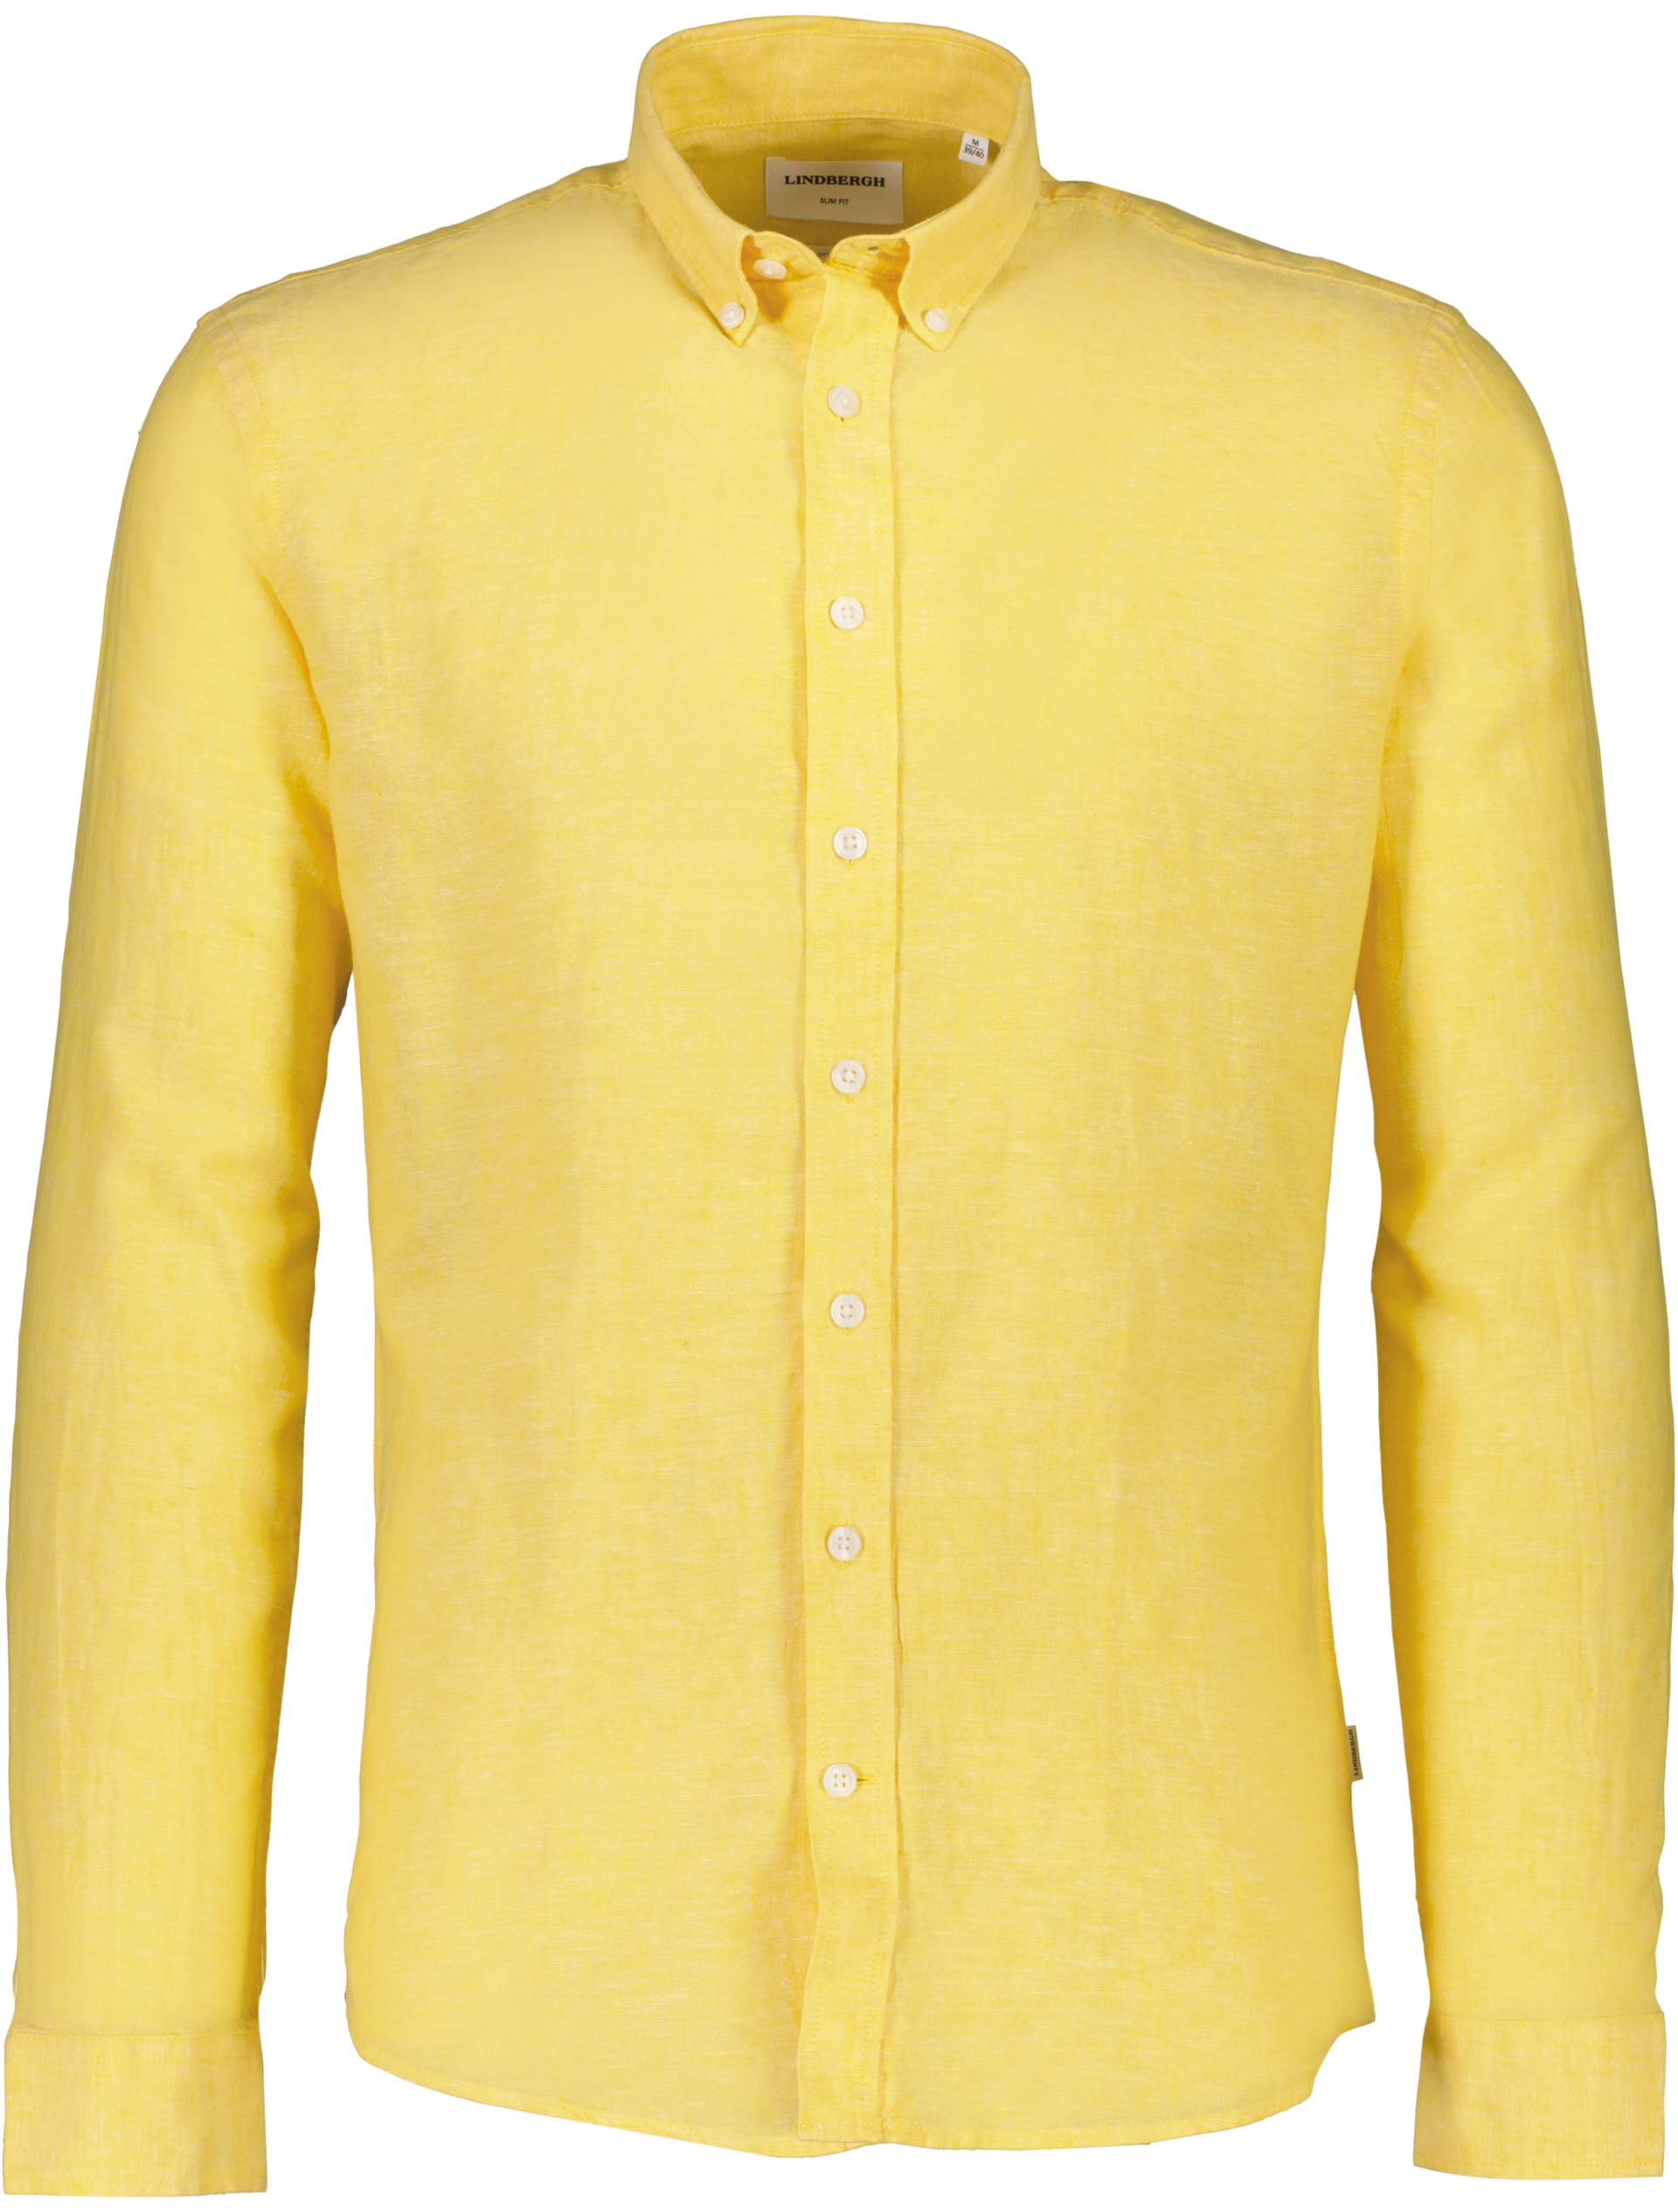 Lindbergh Linen shirt yellow / mid yellow